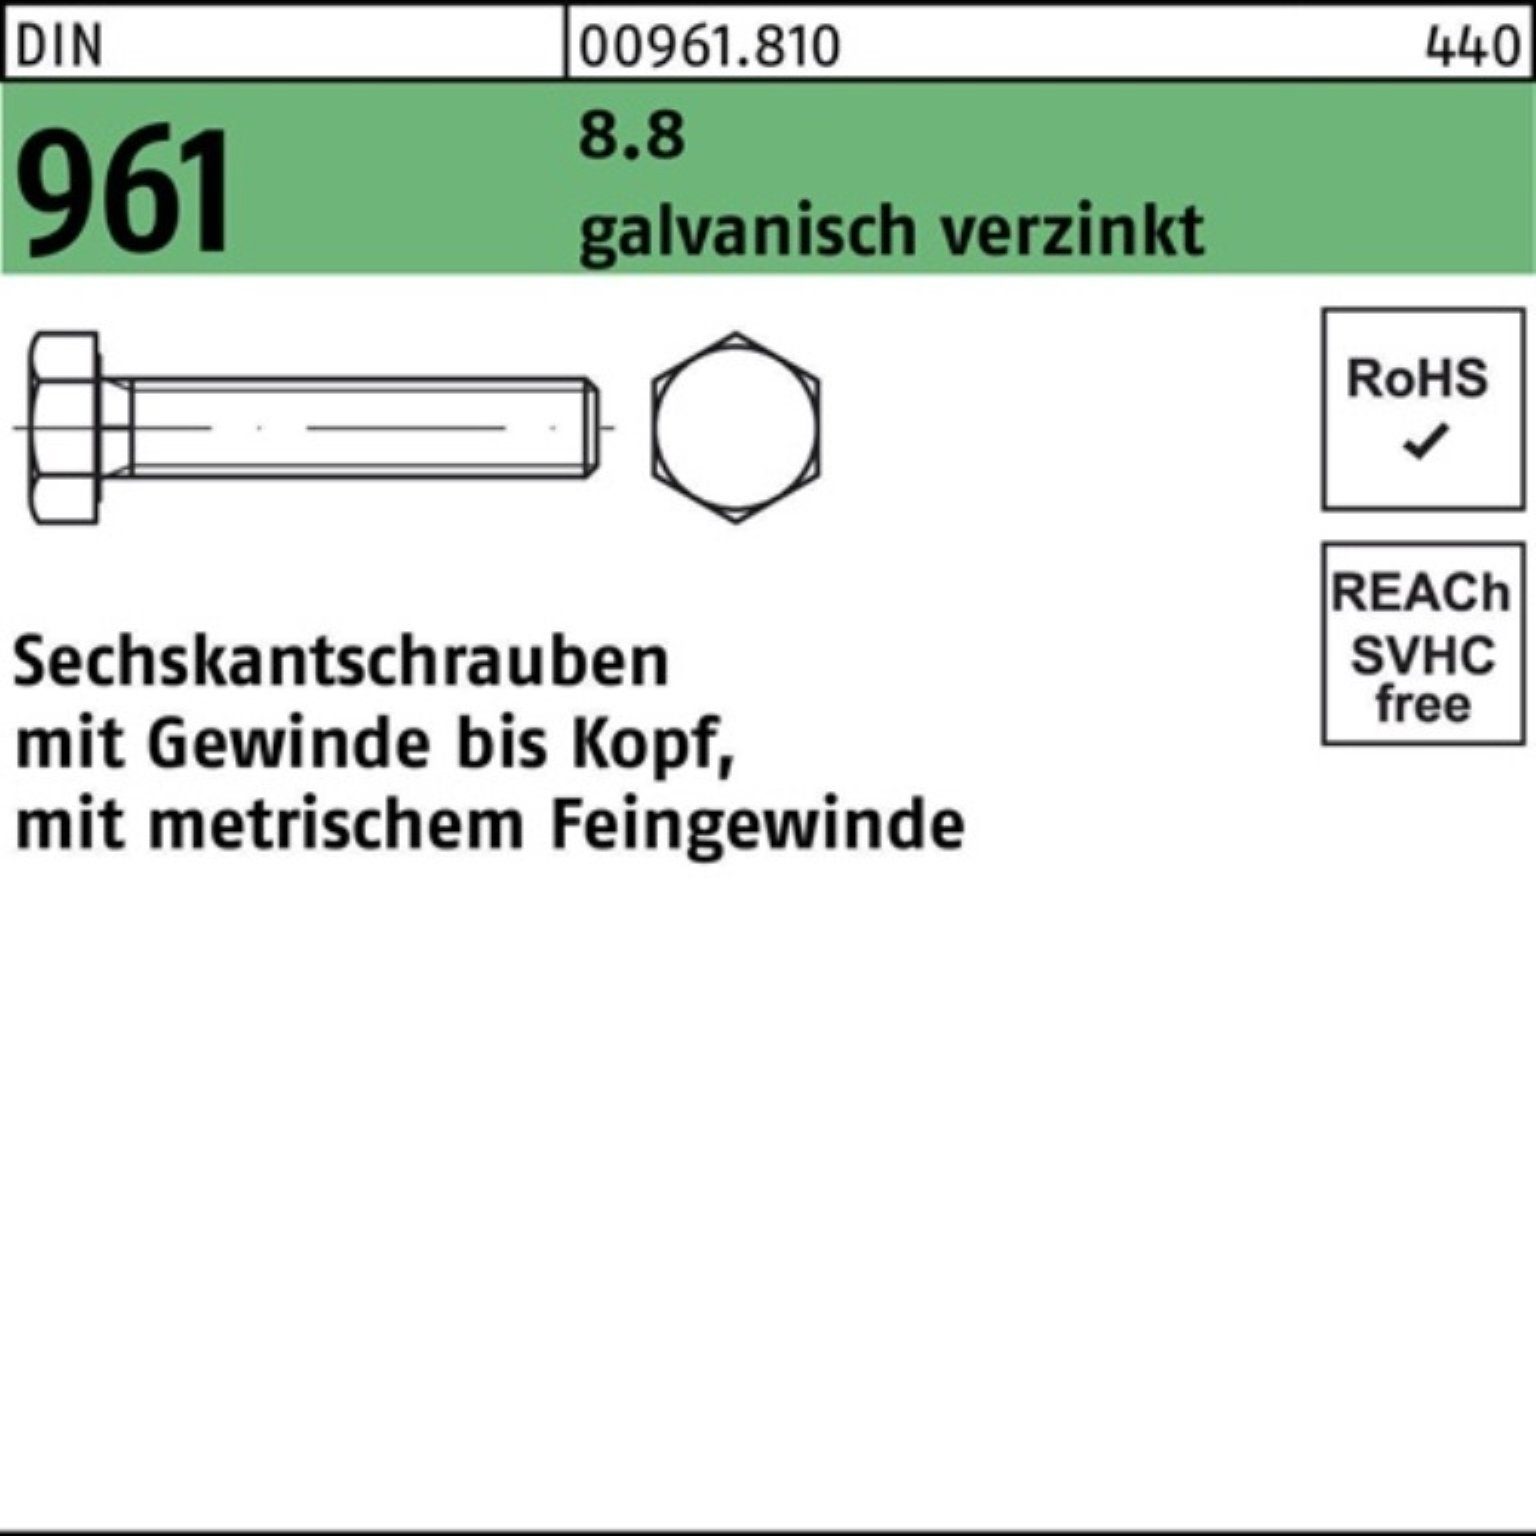 Reyher Sechskantschraube 100er Pack Sechskantschraube M12x1,25x 50 8.8 galv.verz. 961 65 DIN VG